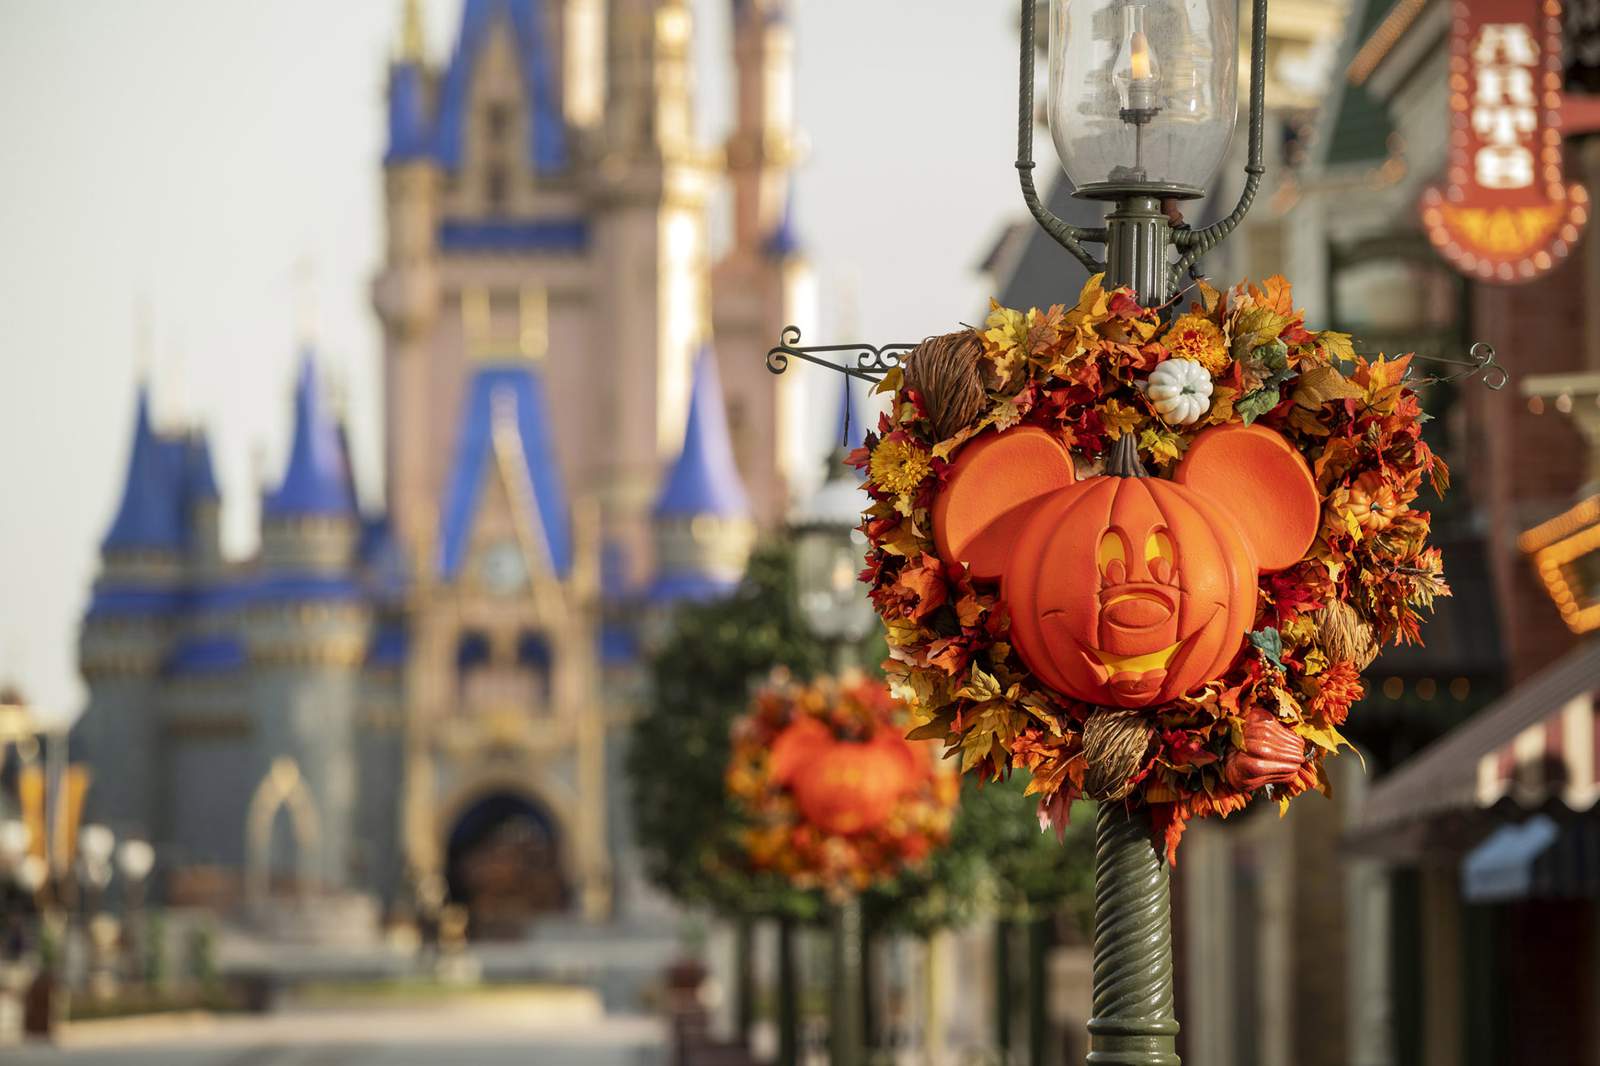 Festive fall fun coming to Walt Disney World